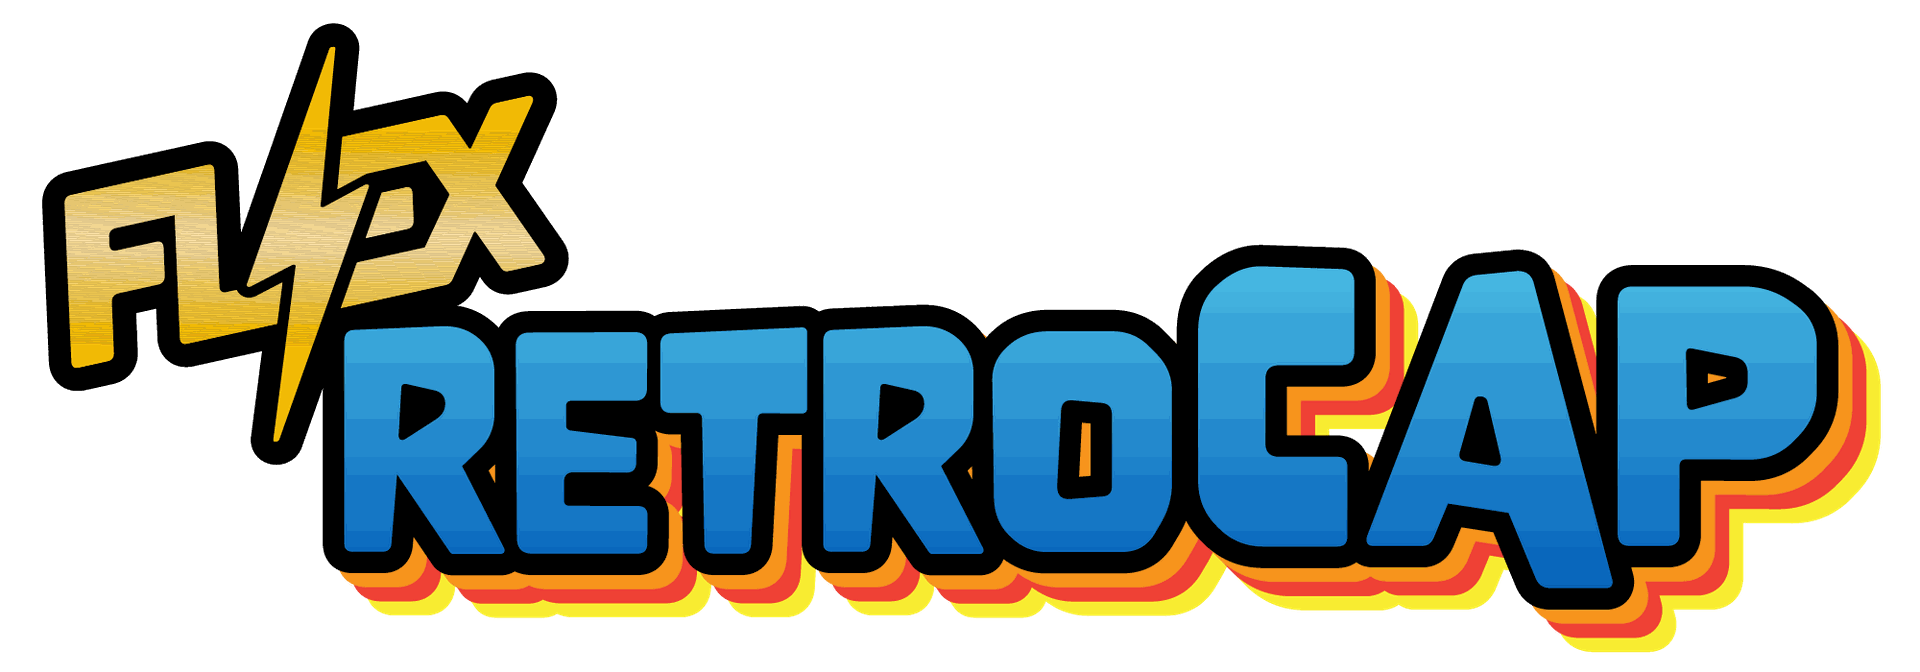 Flex RetroCap logo